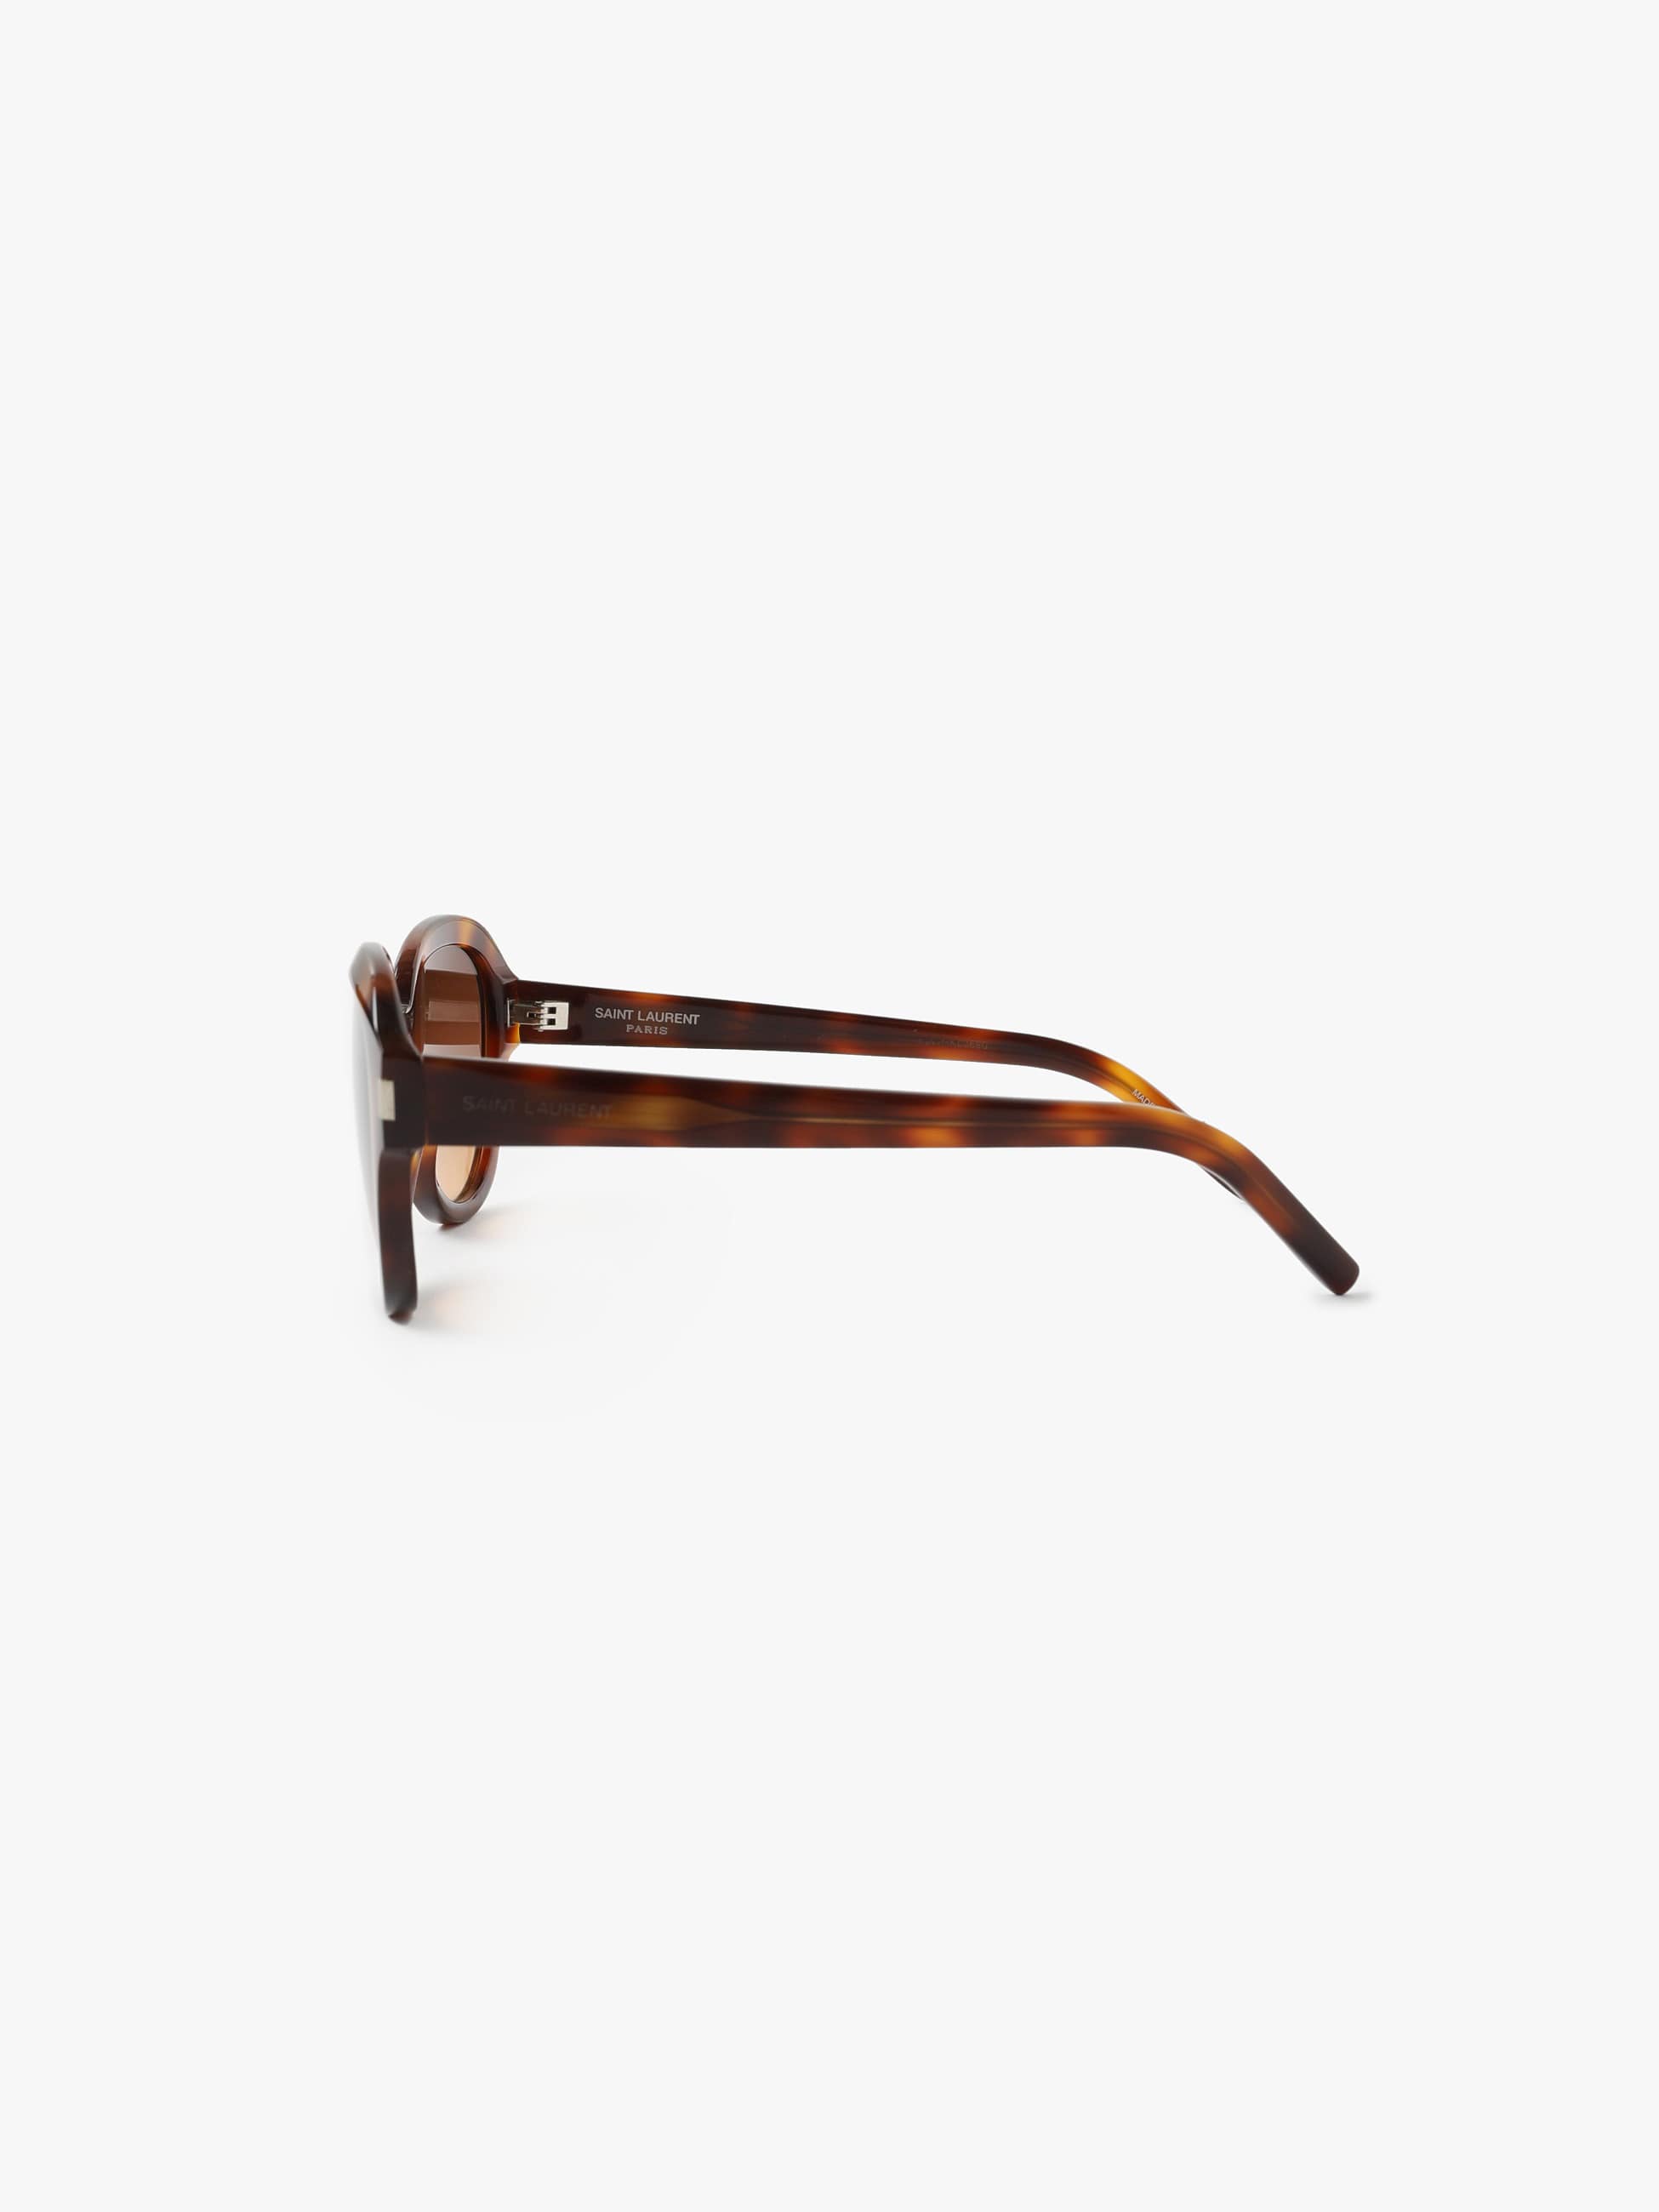 Sunglasses (SL400) 詳細画像 brown 1